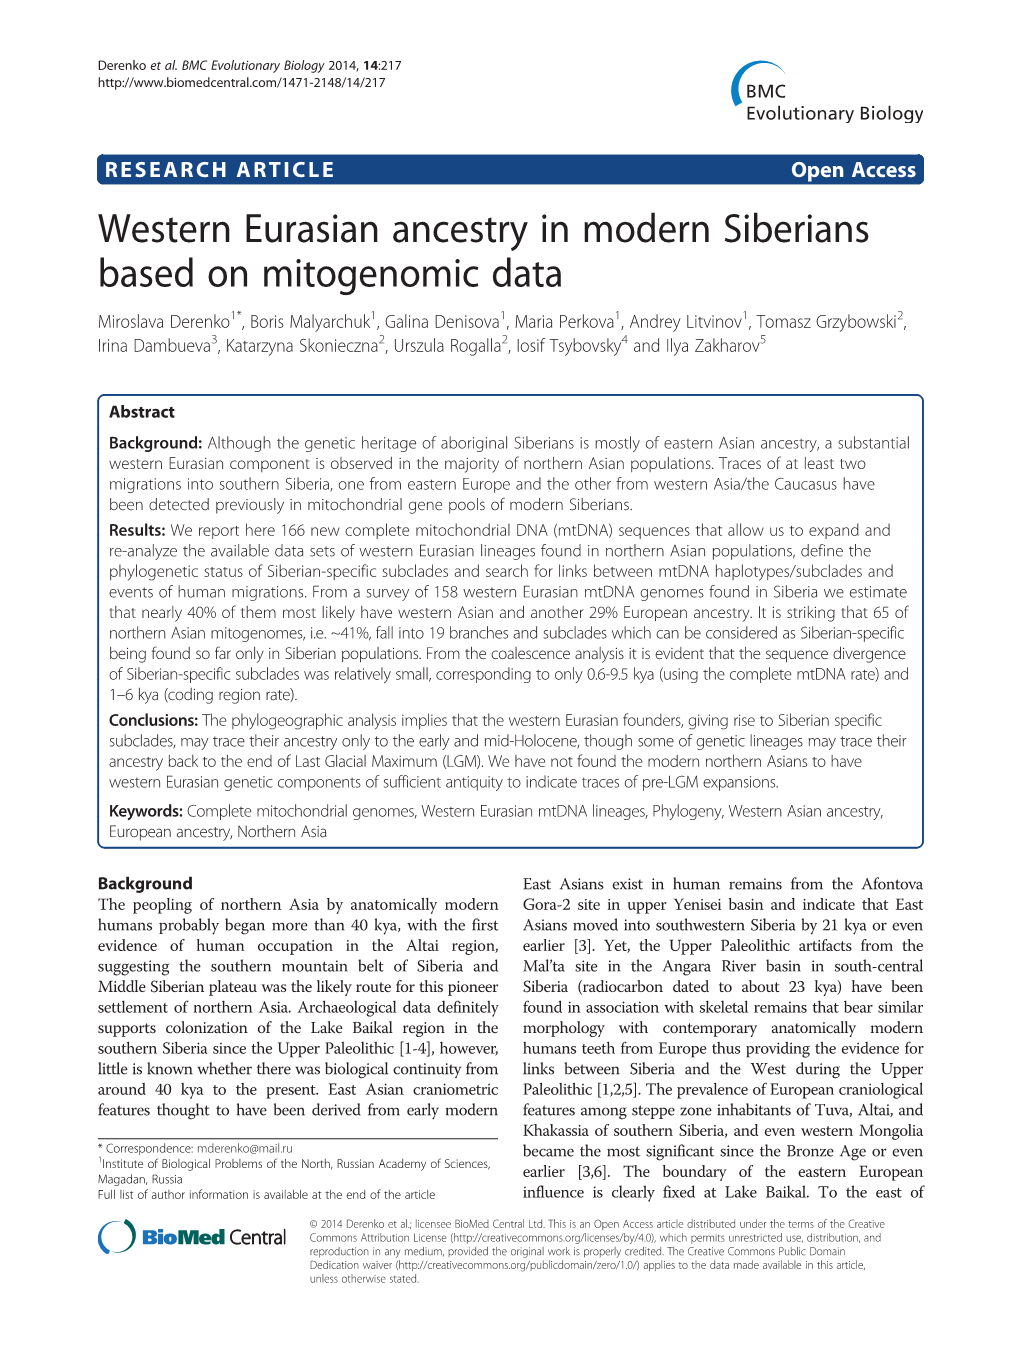 Western Eurasian Ancestry in Modern Siberians Based on Mitogenomic Data